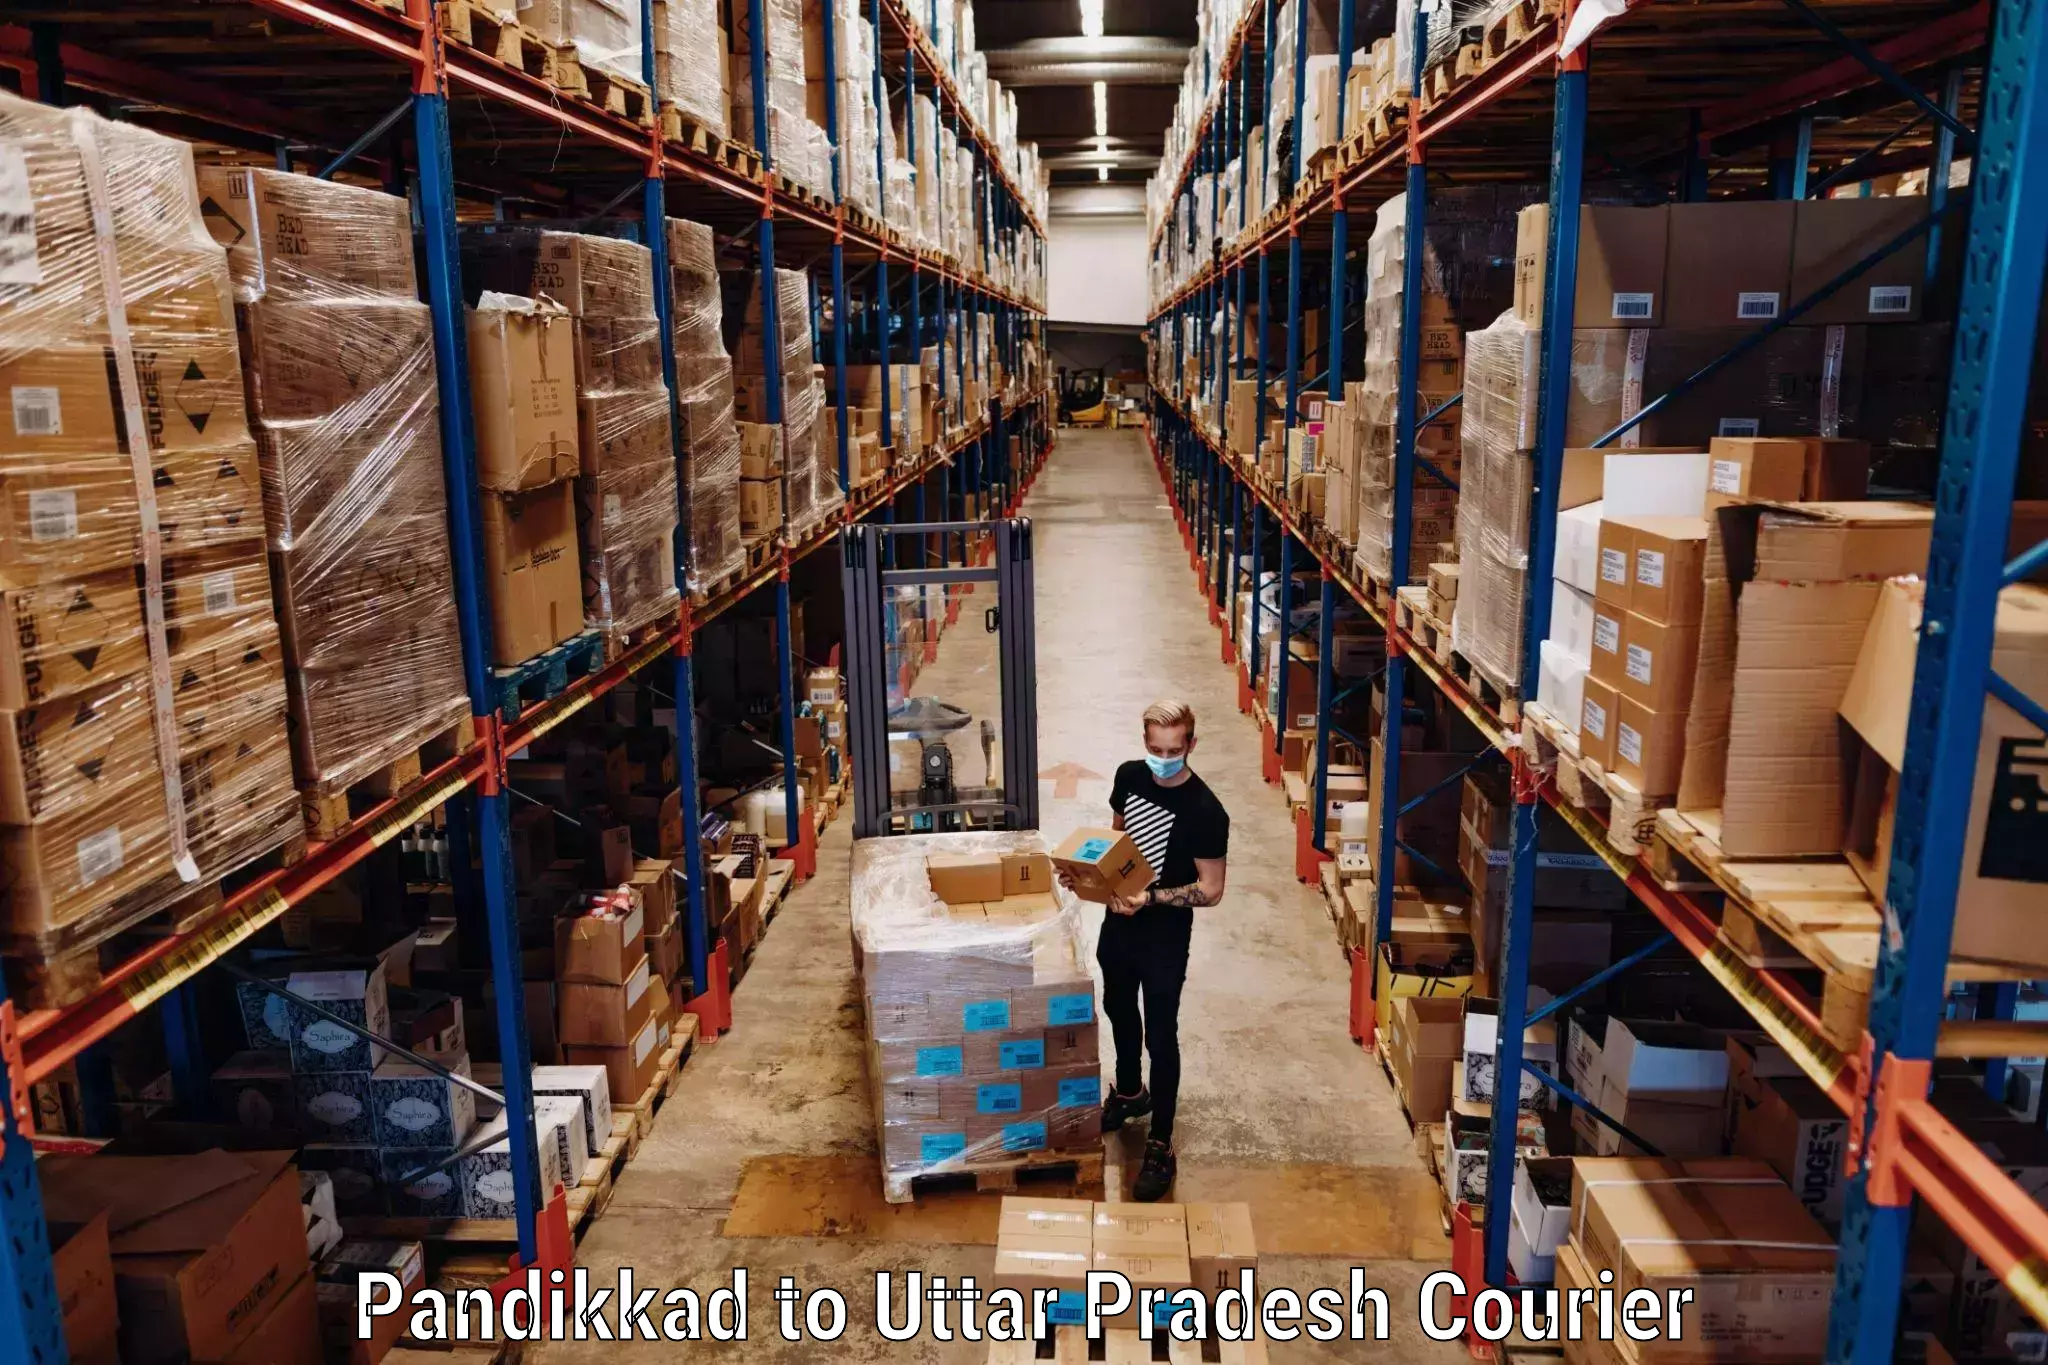 High-quality baggage shipment in Pandikkad to Uttar Pradesh